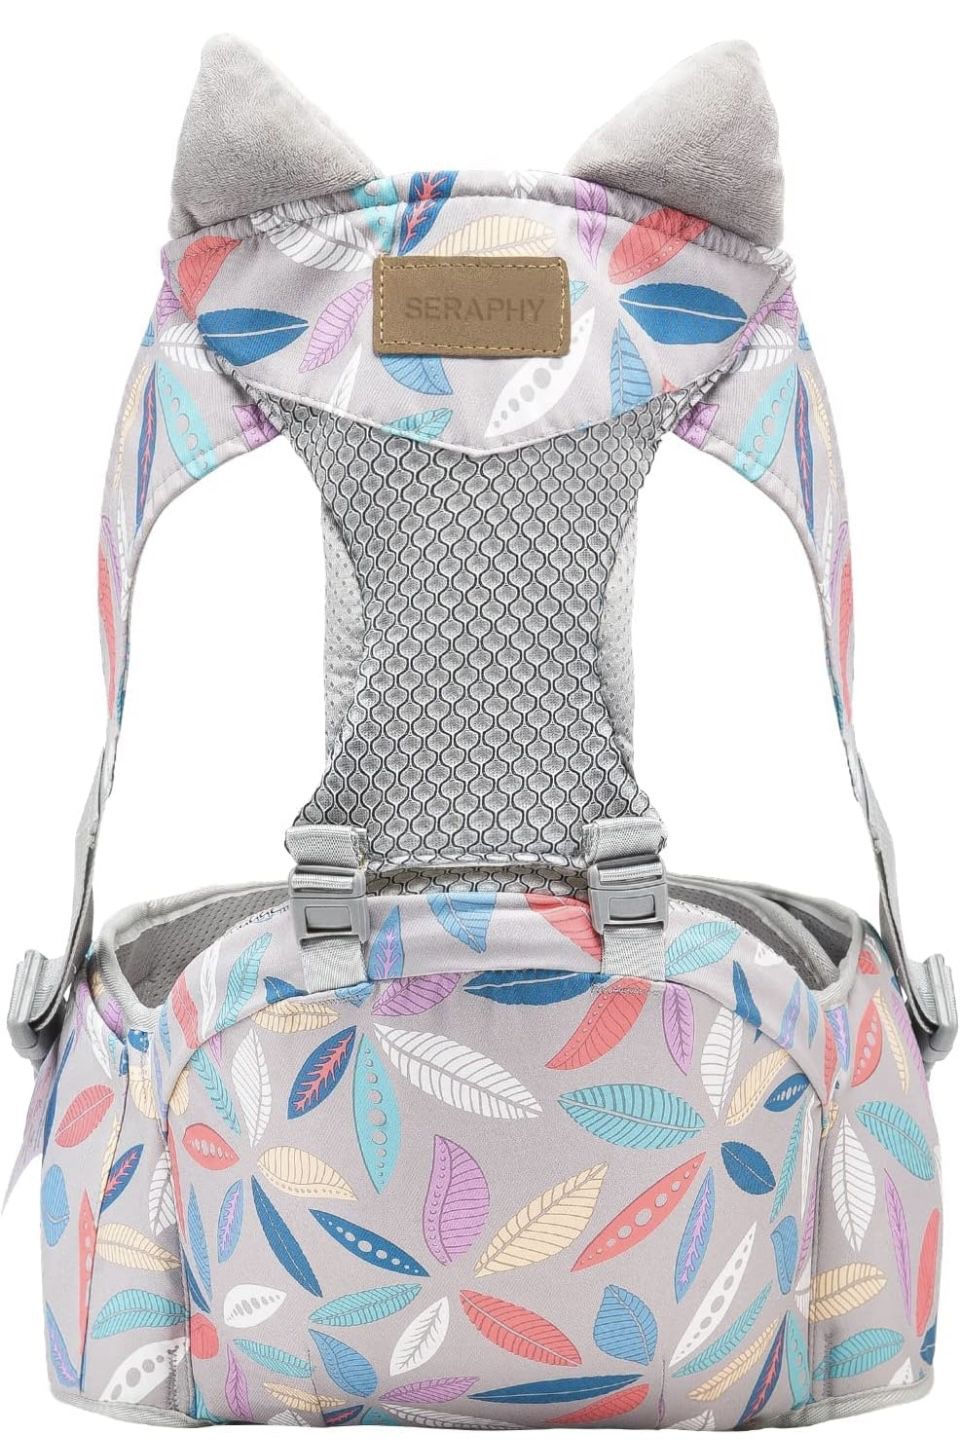 SERAPHY Baby Hip Seat Carrier Newborn to Toddler, Adjustable Safey Strap Infant